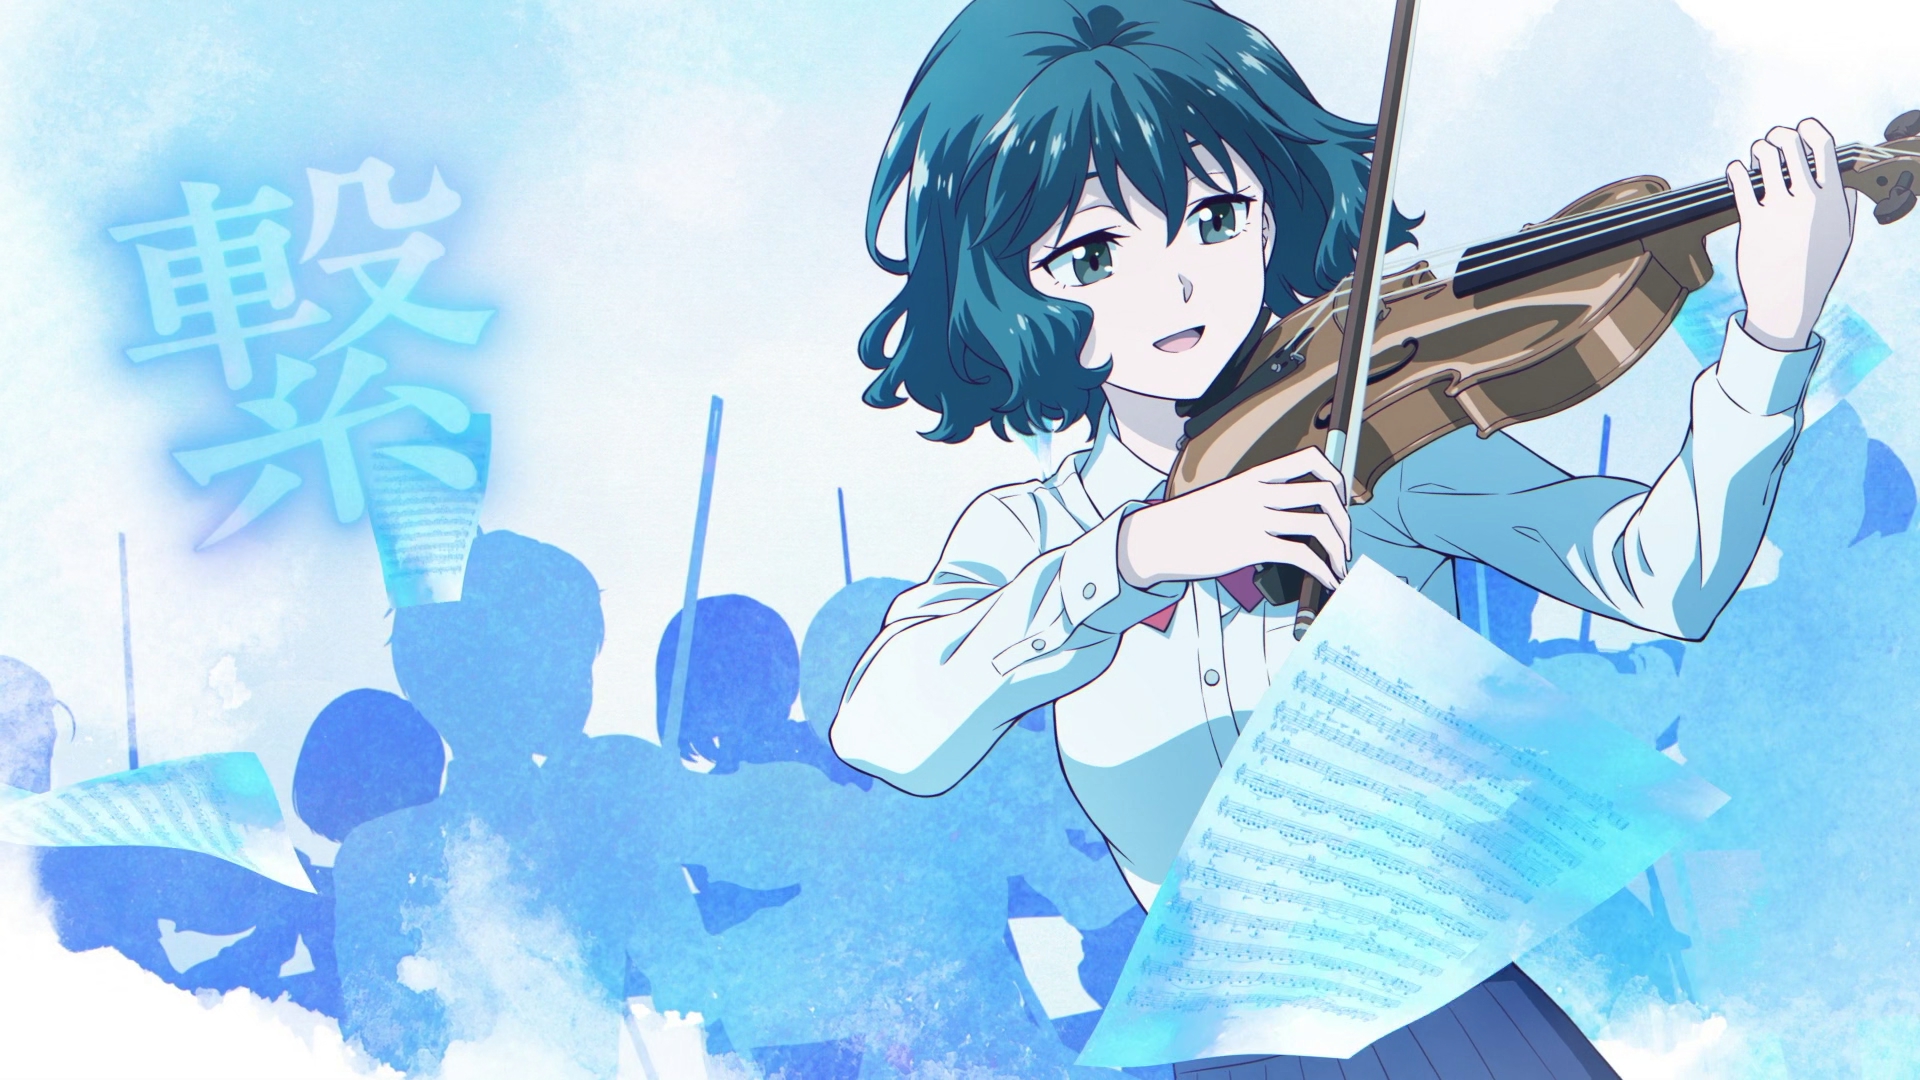 Anime Girls Blue Orchestra Musical Instrument Violin Japanese Paper Short Hair Bow Tie Schoolgirl Sc 1920x1080